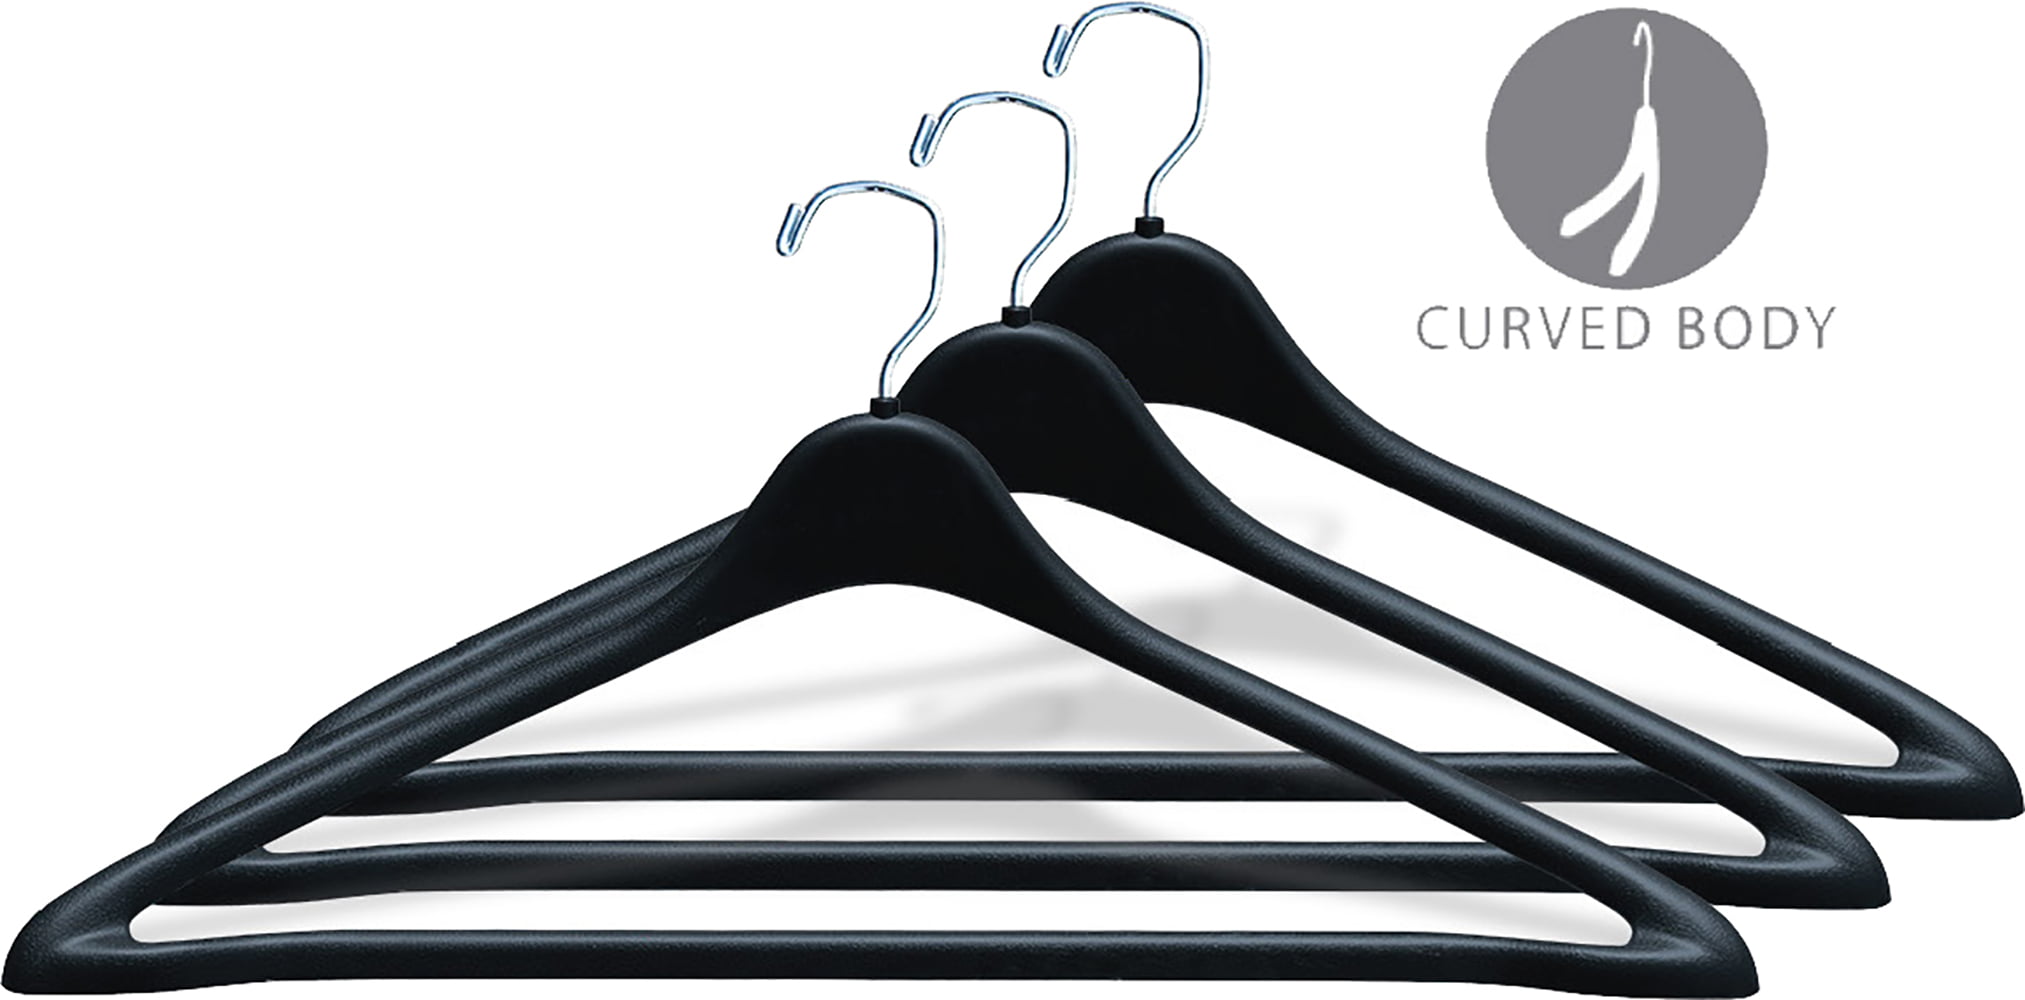 THE UM24 Set of 9 Heavy Duty Tubular Hangers Black Jumbo Plastic Adult  Cloth Coat Suit Closet Organization Hanger Black